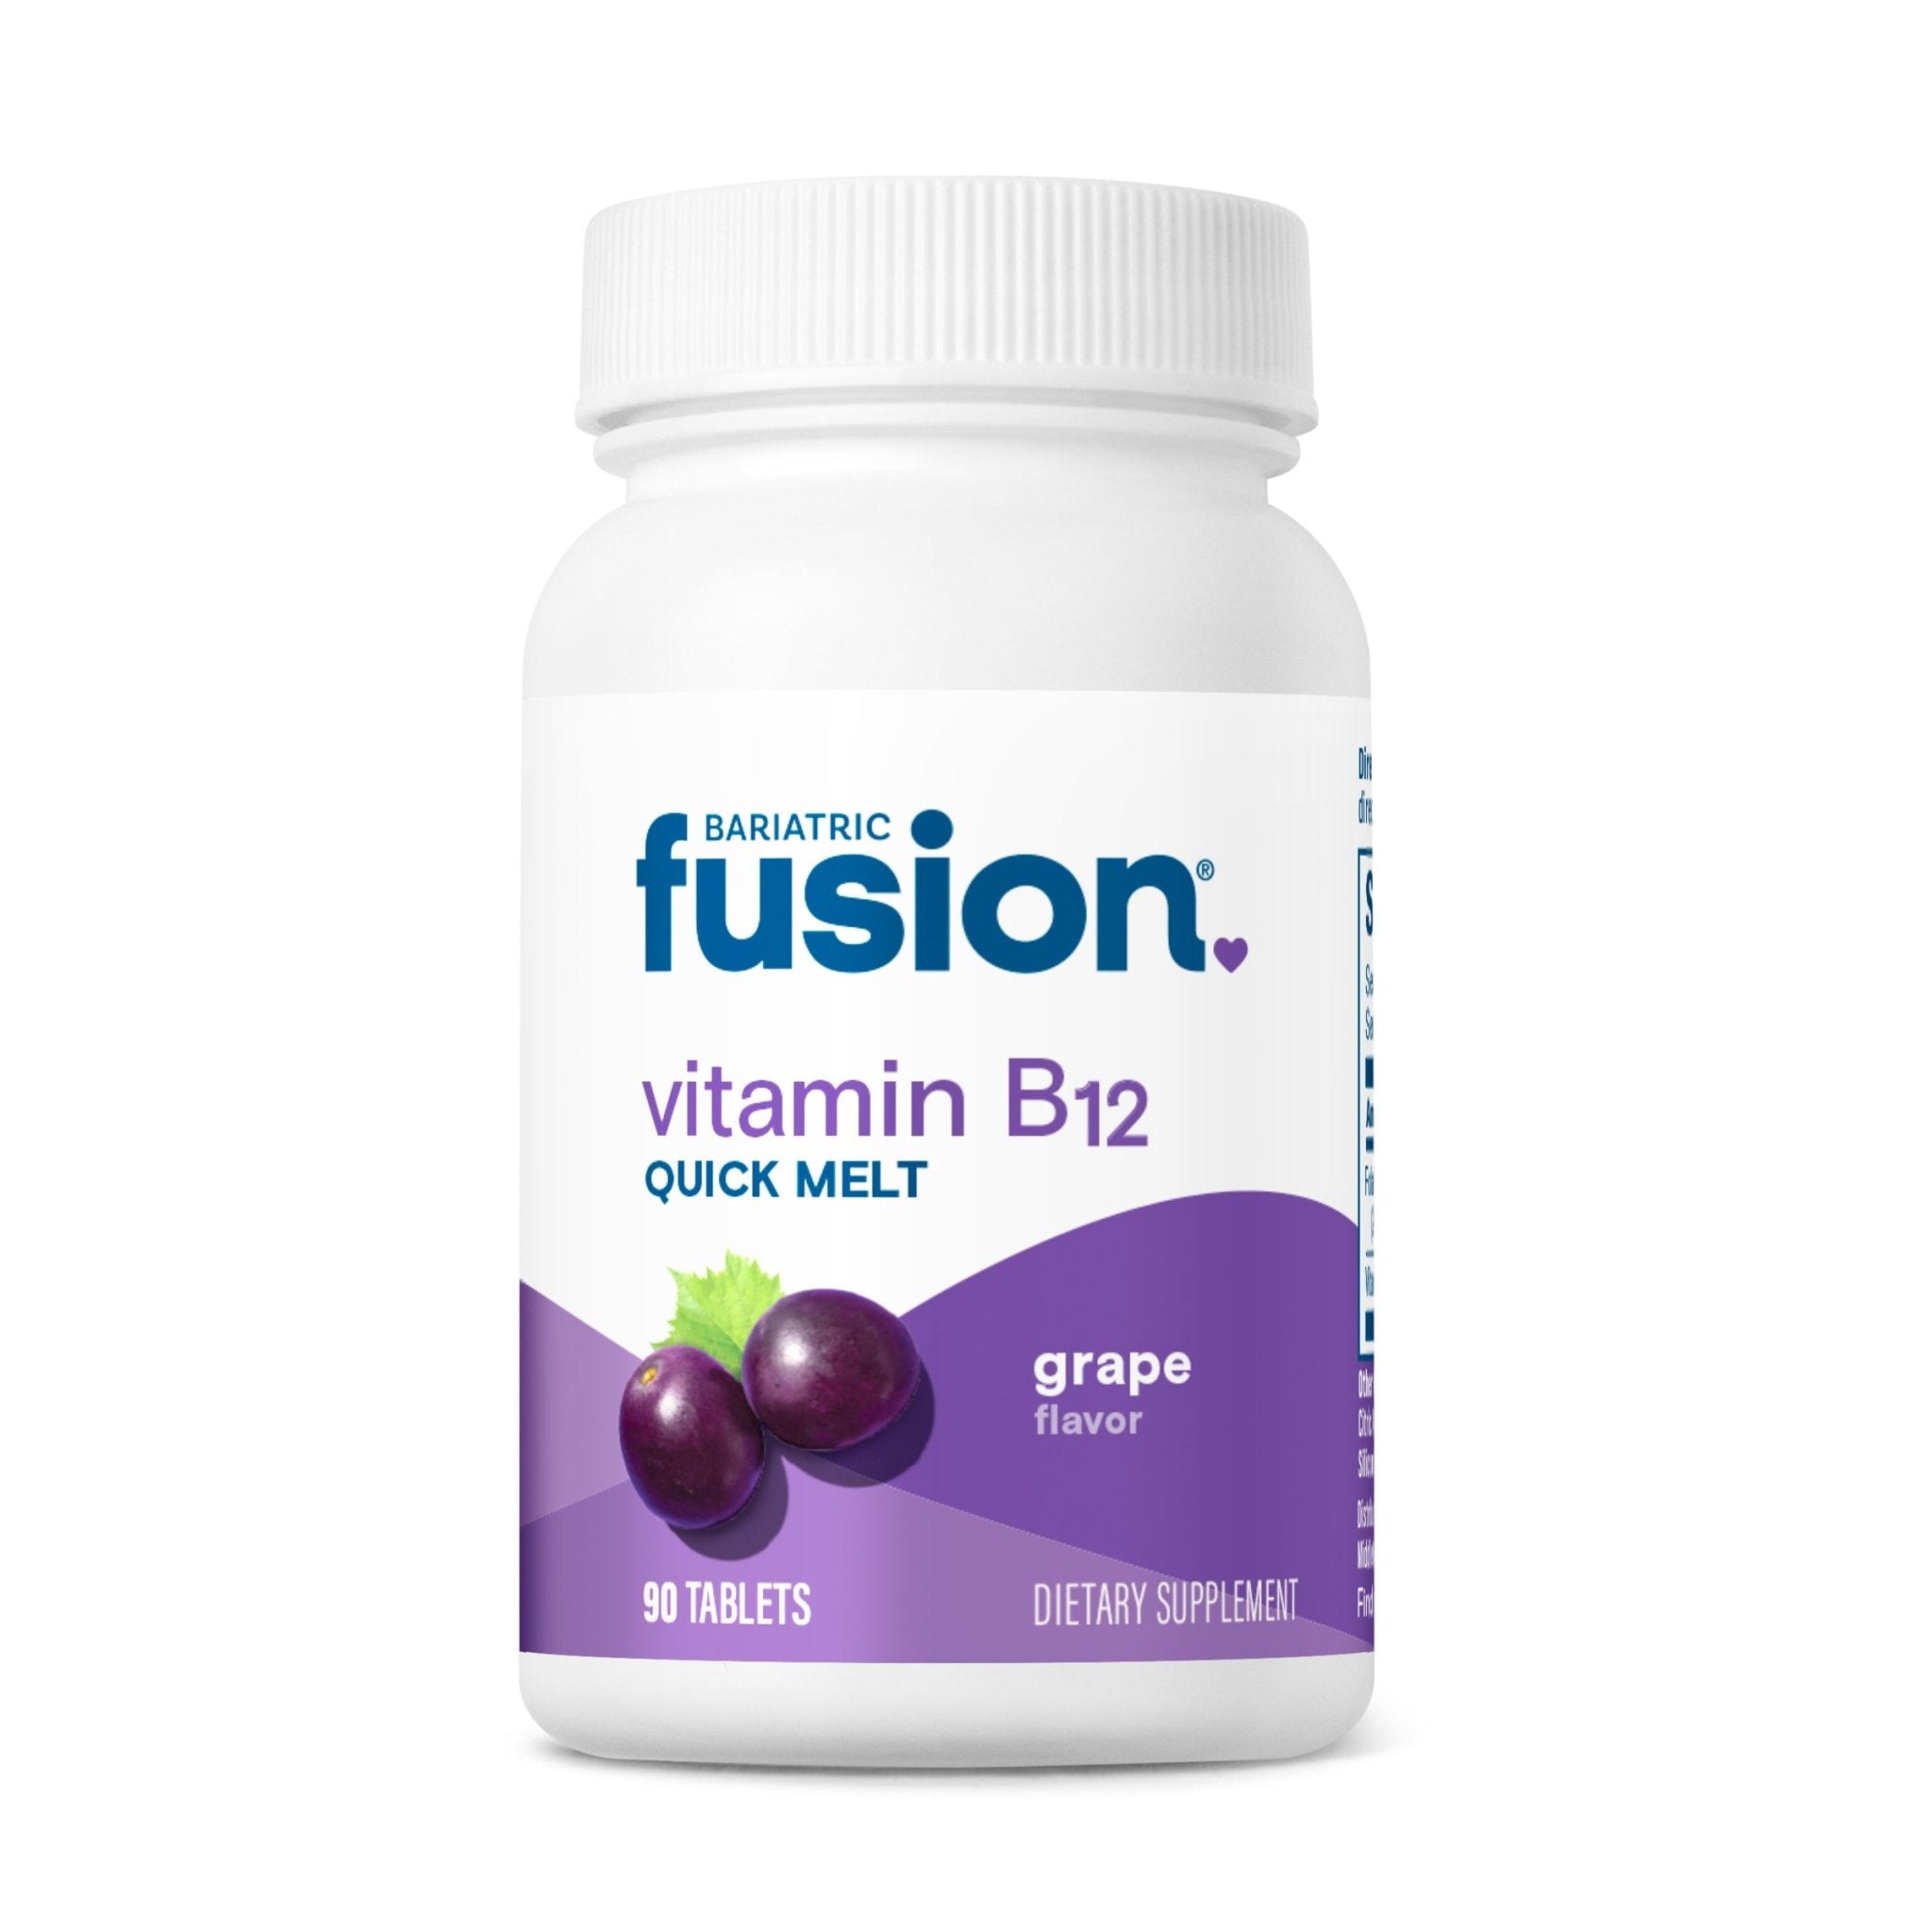 Bariatric Fusion Grape Vitamin B12 Quick Melt 90 chewable tablets.